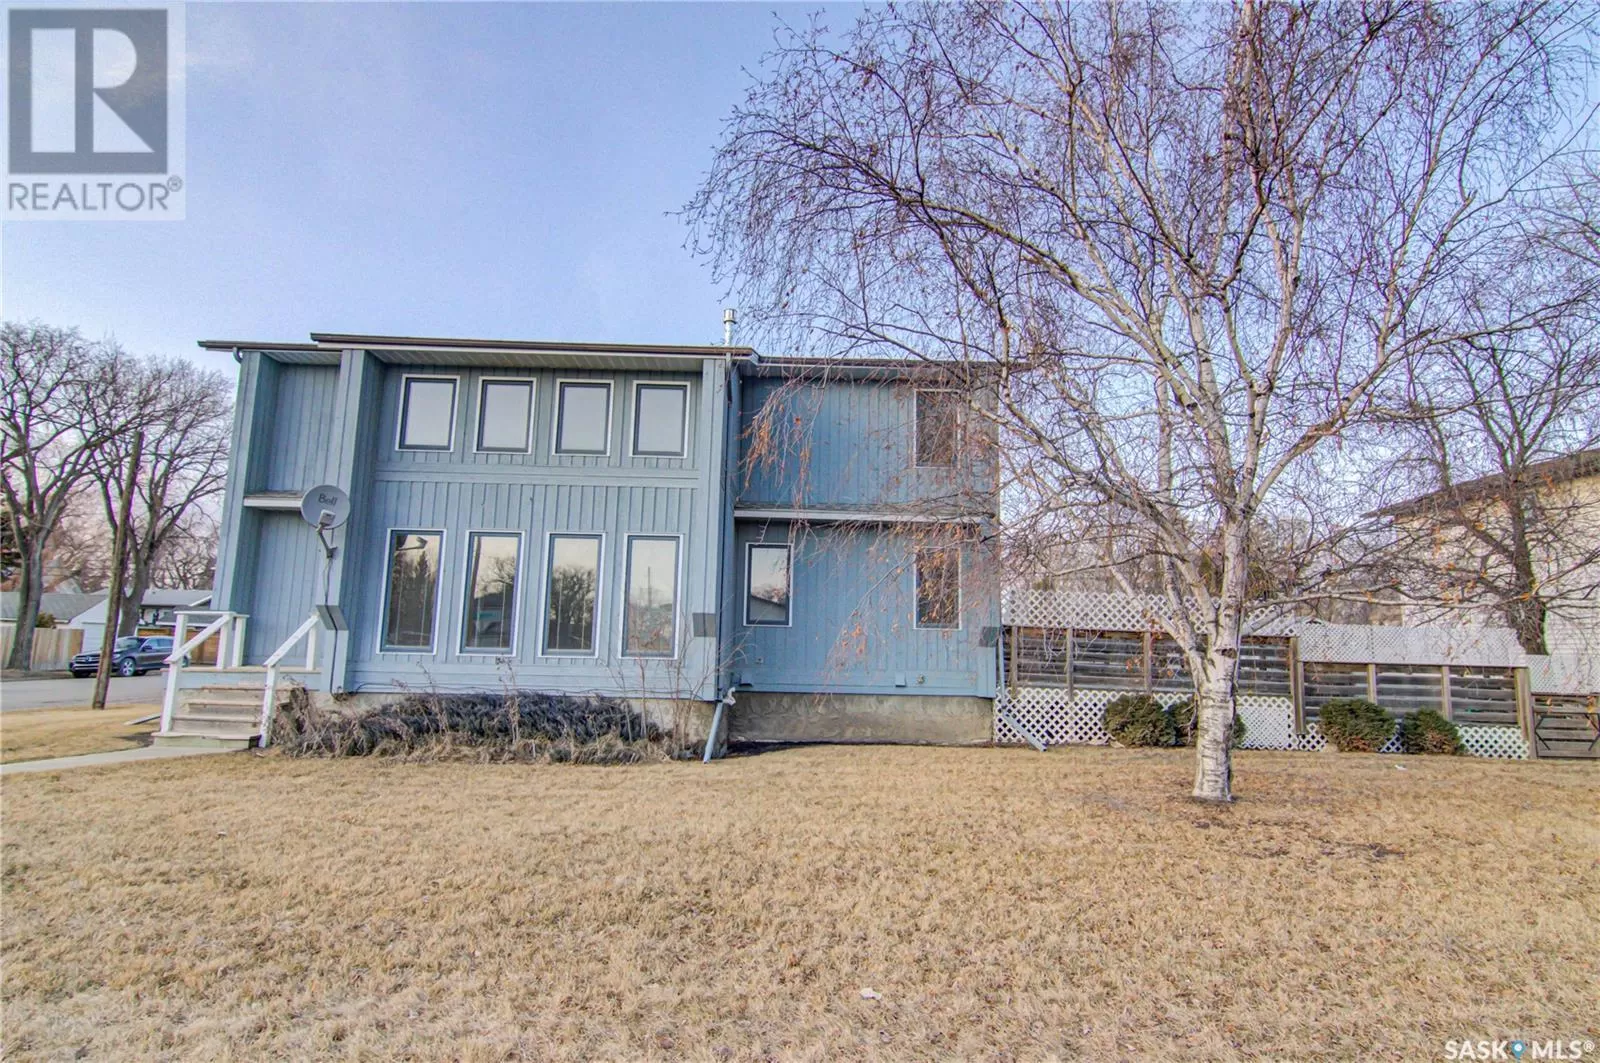 House for rent: 302 Mcleod Avenue E, Melfort, Saskatchewan S0E 1A0